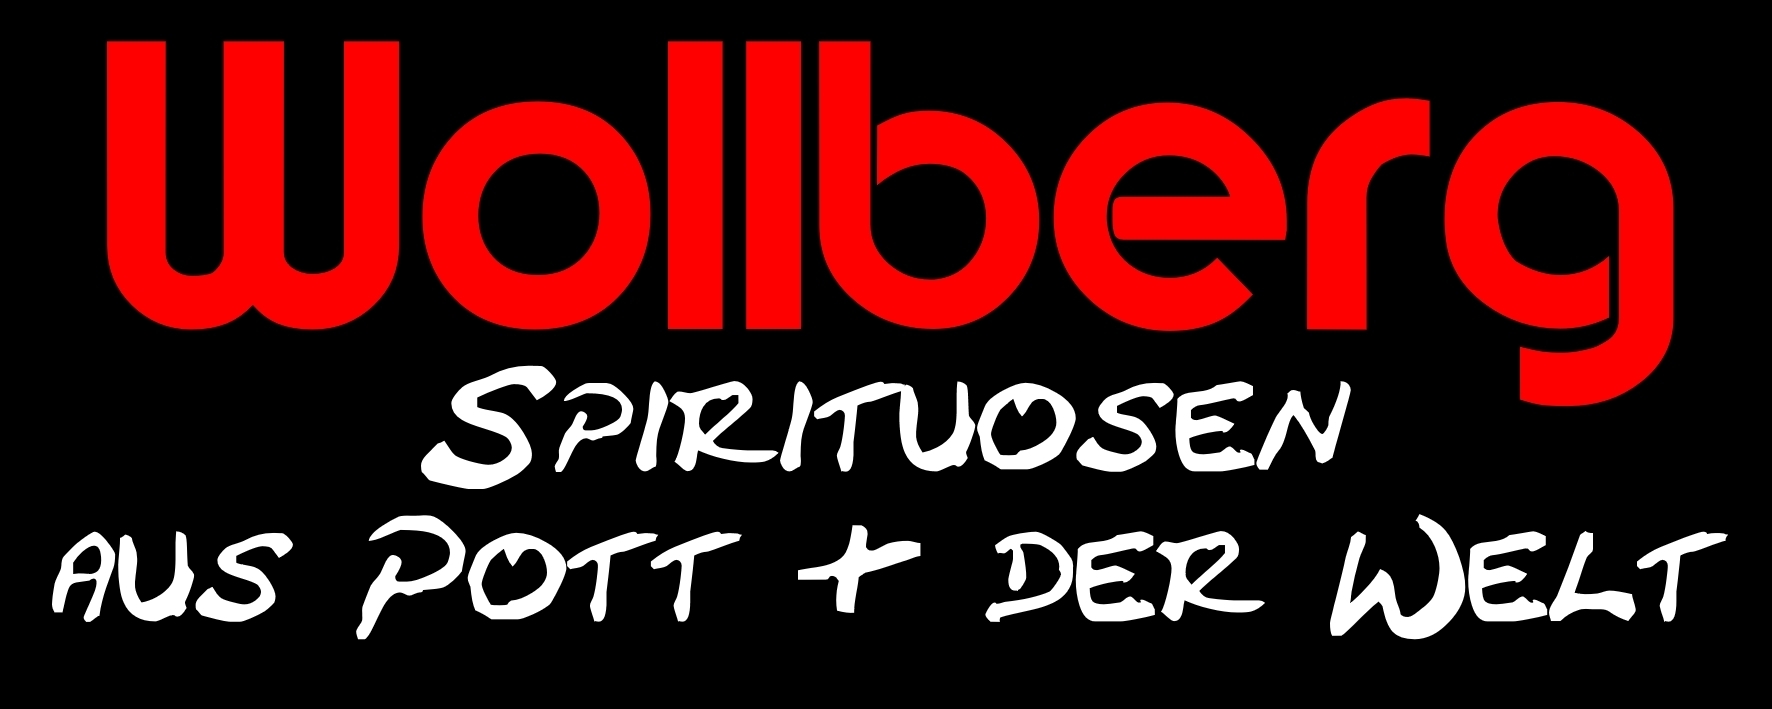 Wollberg Spirituosen Online